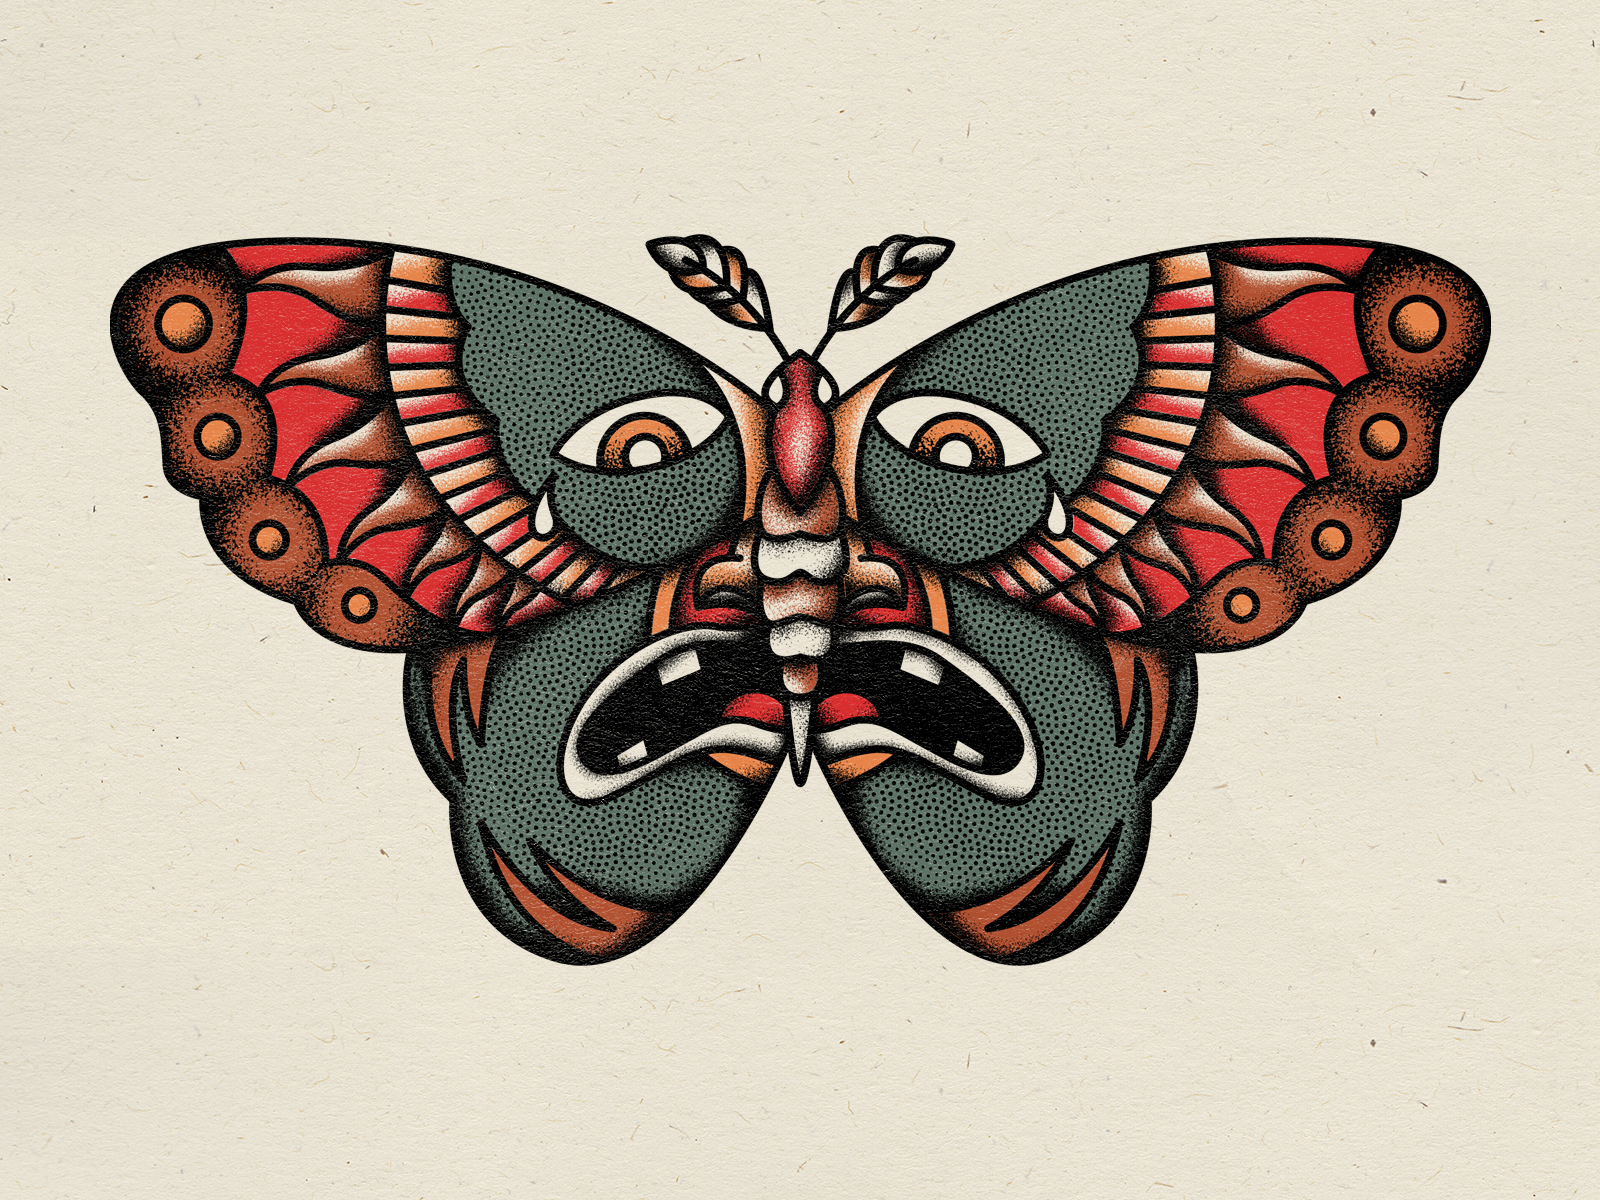 50 Unbelievable Death Moth Tattoo Ideas  Meanings